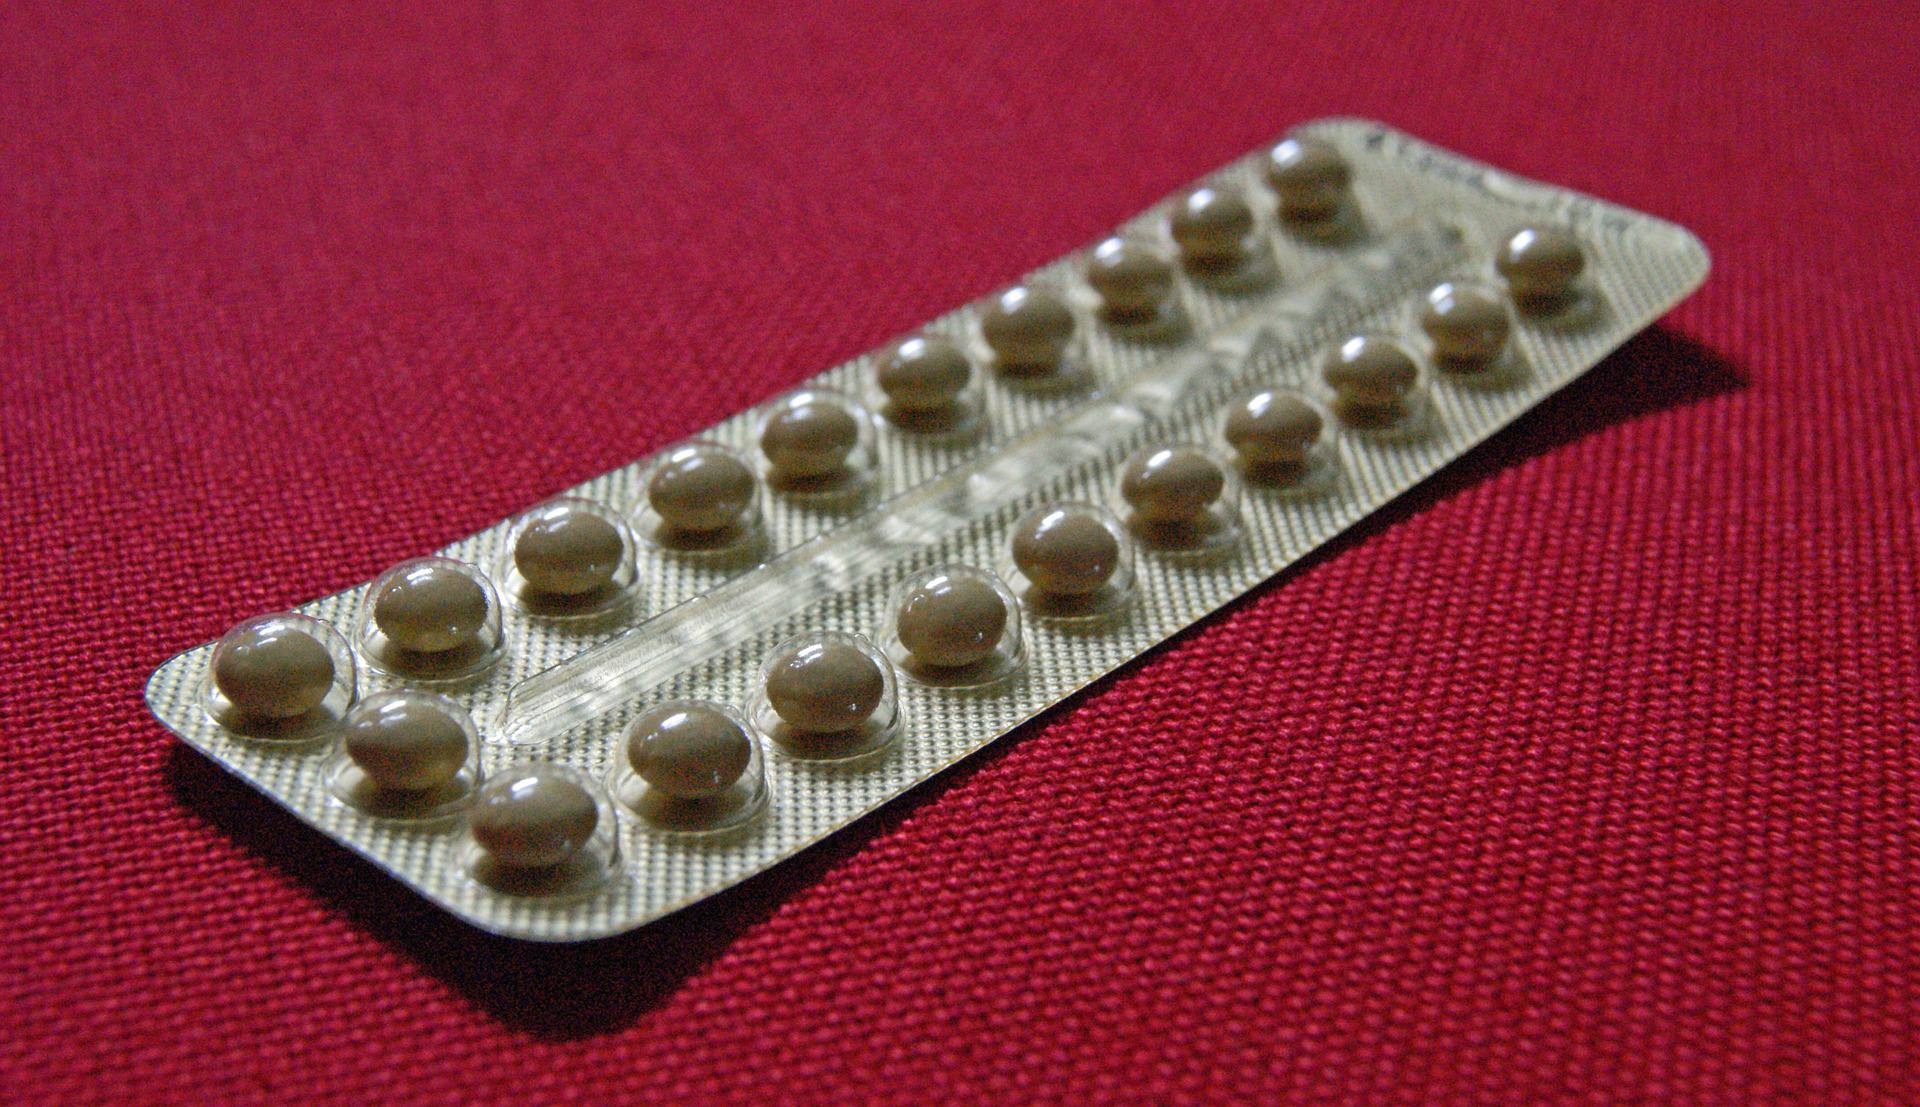 contraceptive-pills-849413_1920